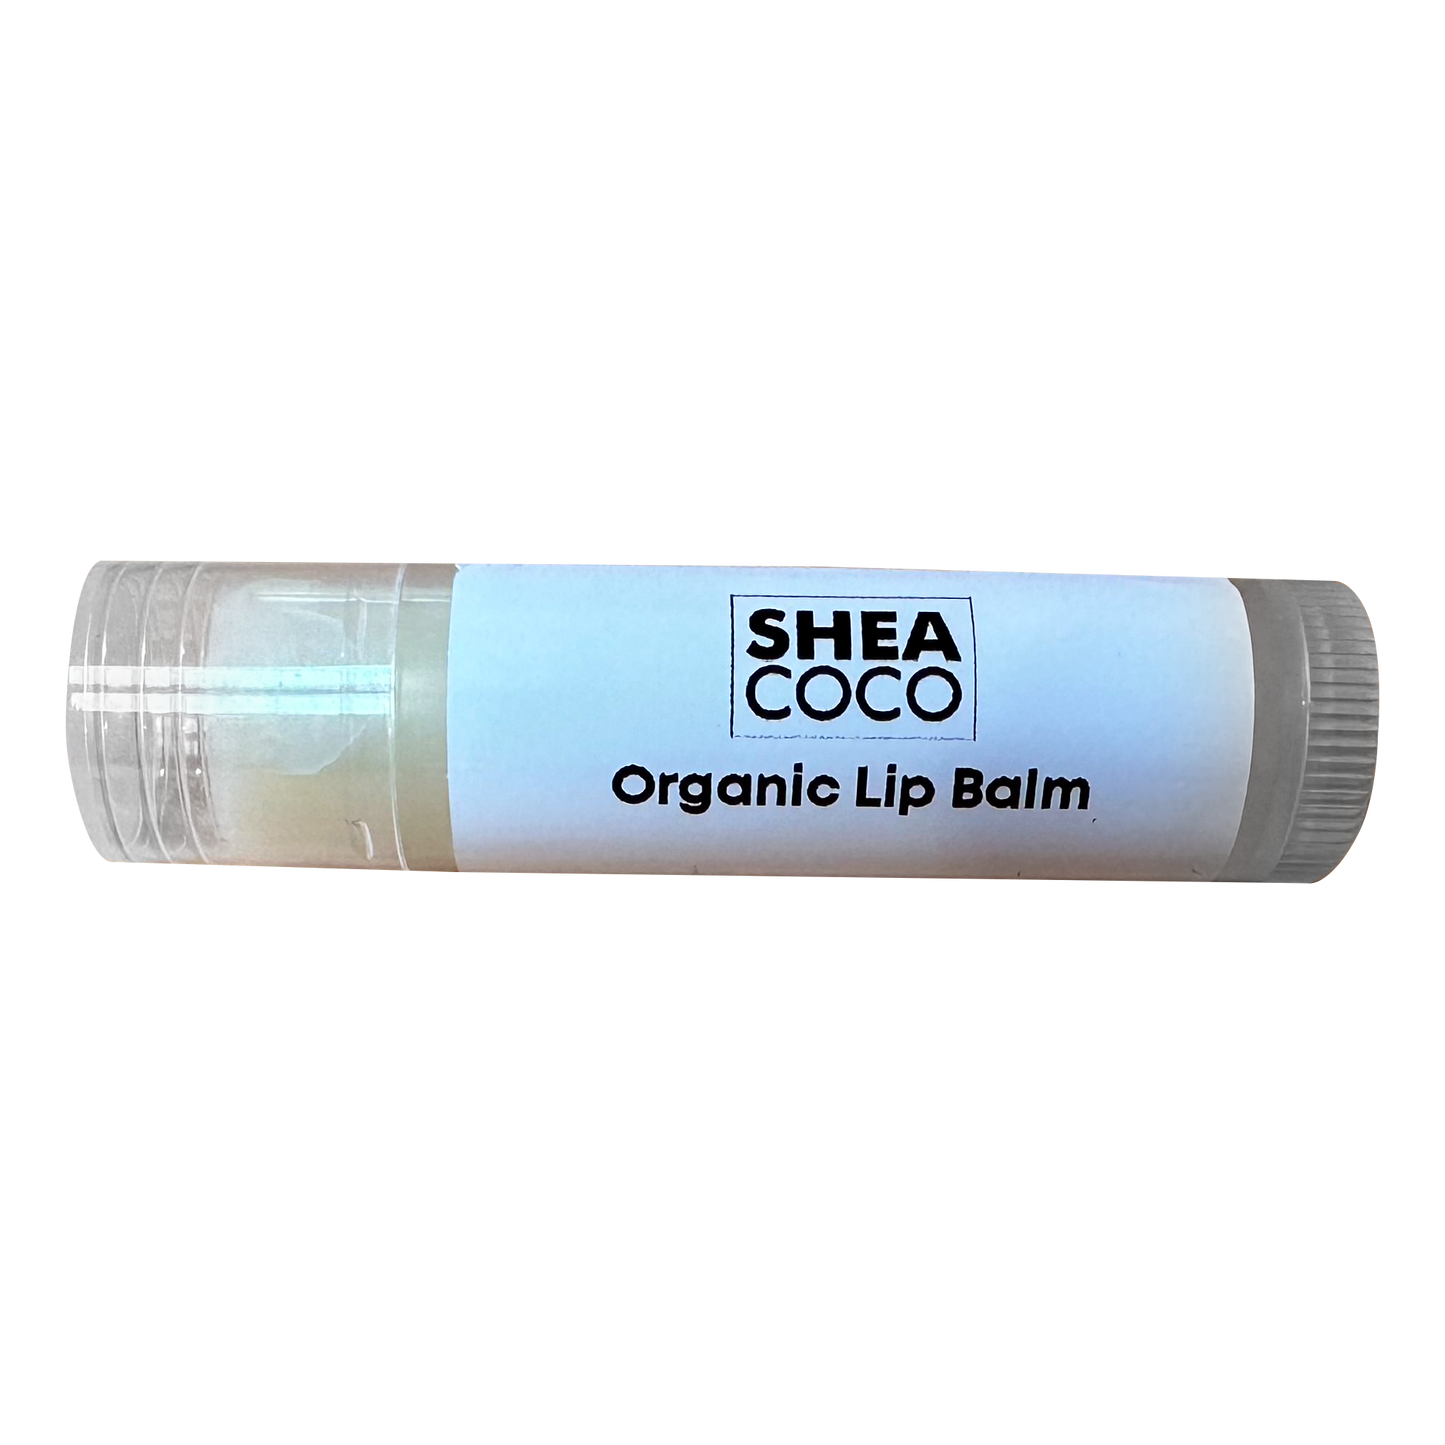 Shea Coco Organic Lip Balm